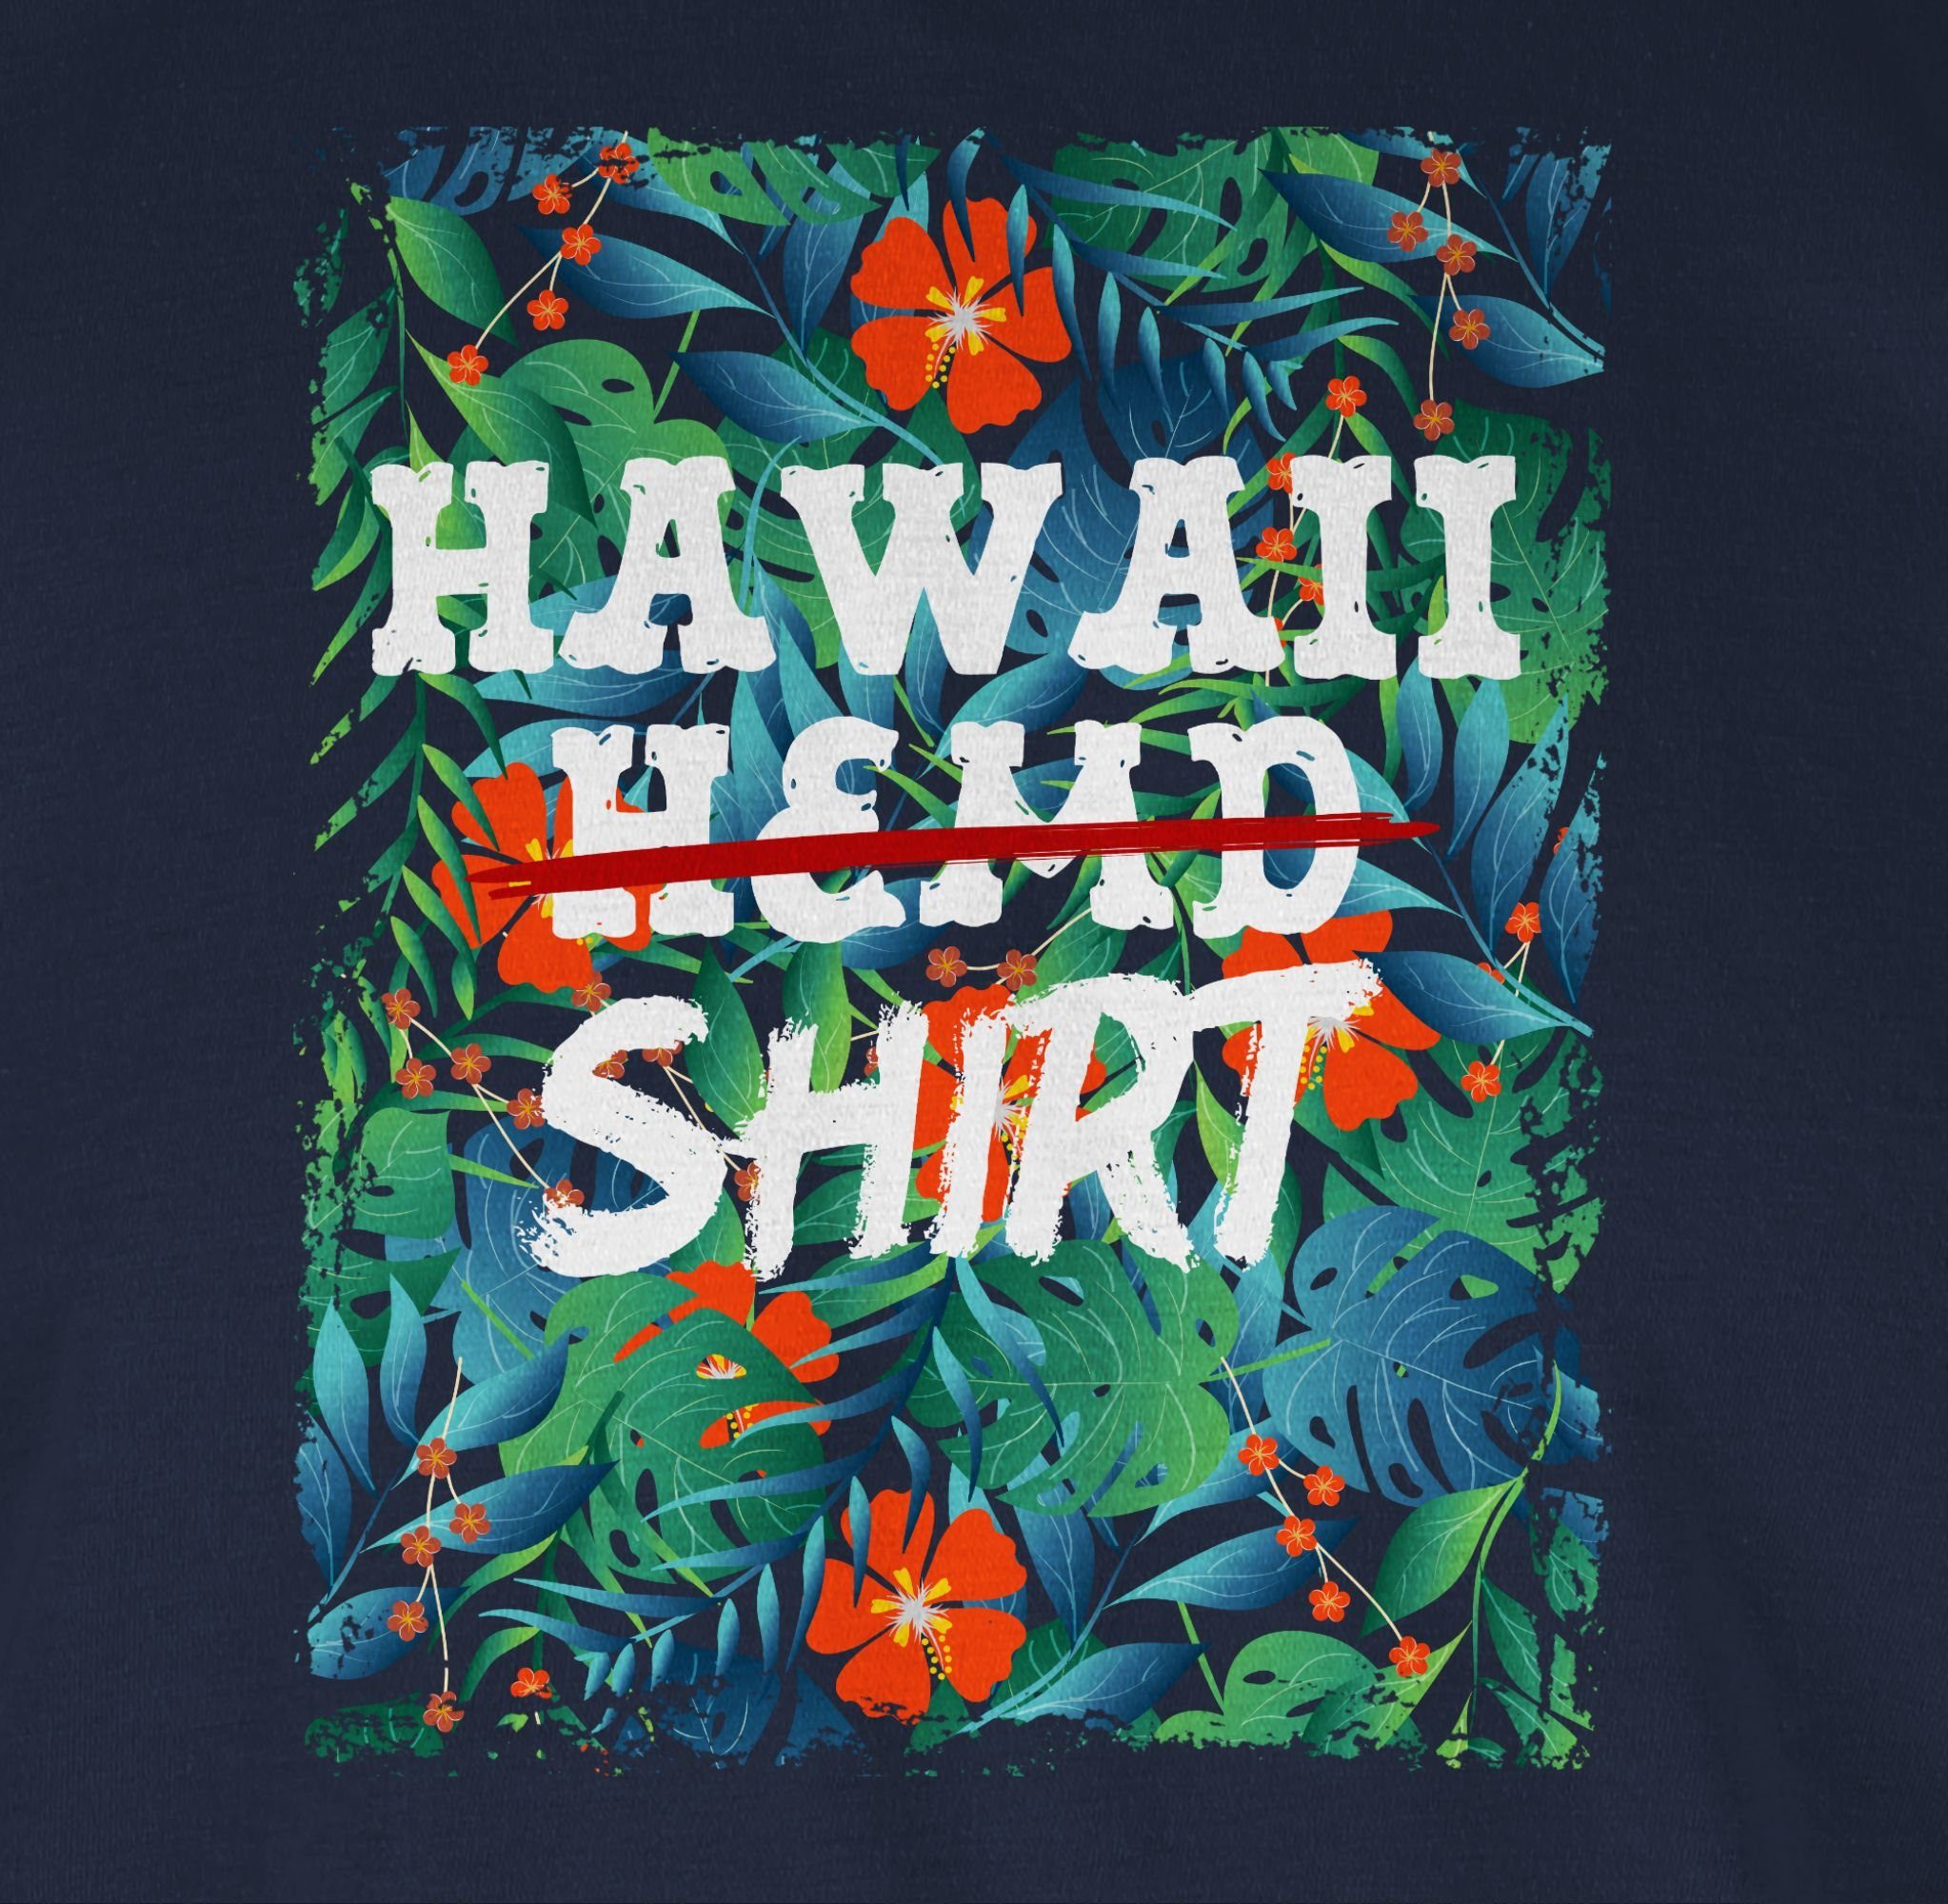 Shirtracer T-Shirt Hawaii Party Hemd Karneval 2 - Blau Navy Hawaii-Kleidung Karibik Outfit Shirt Hawaiian Aloha